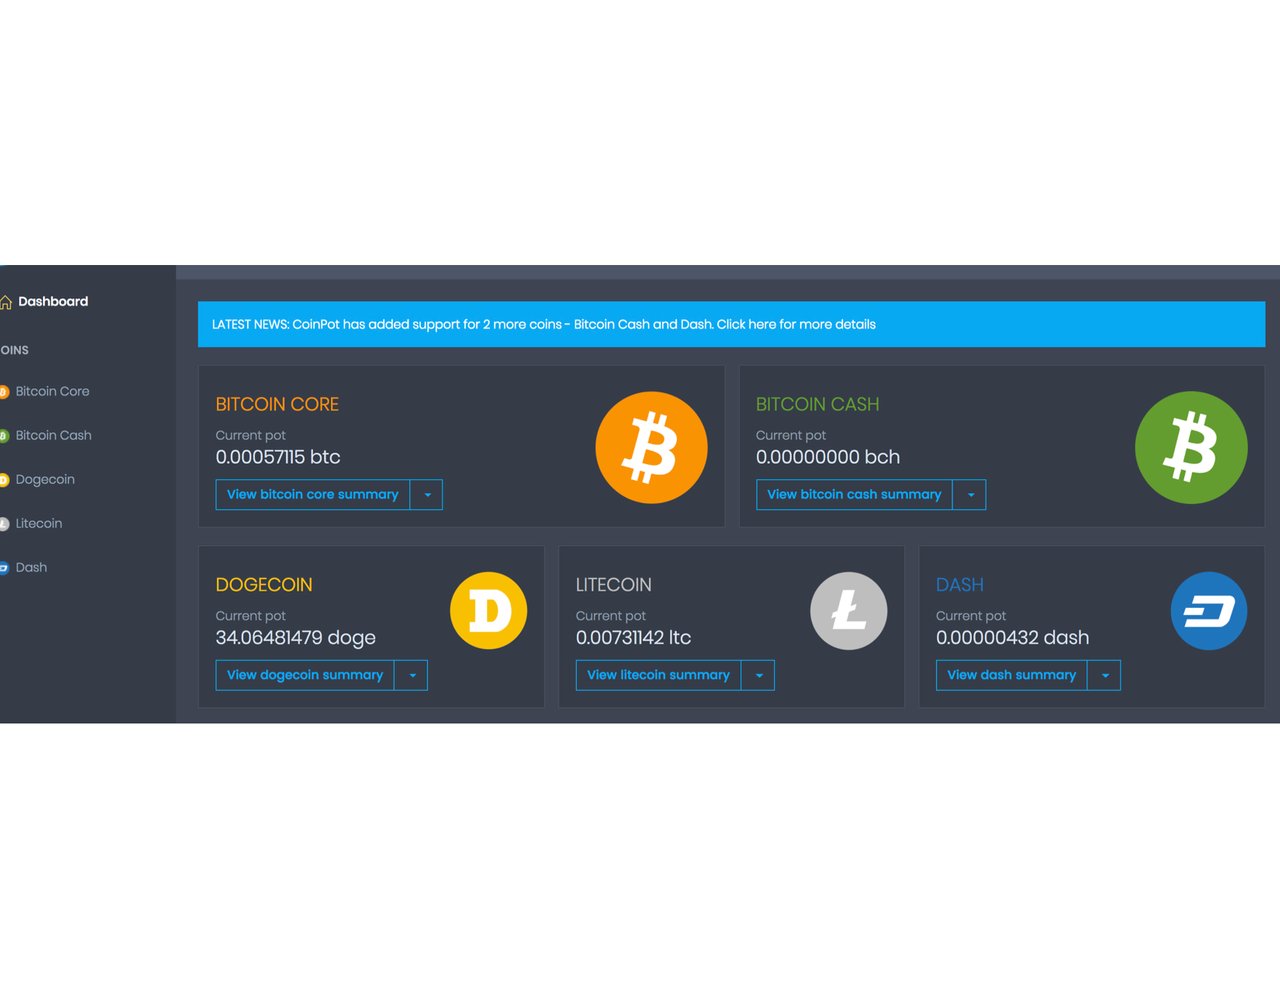 mining bitcoin litecoin doge dash coinpot | bitcoinhelp.fun - BIGGEST MAKE MONEY FORUM ONLINE